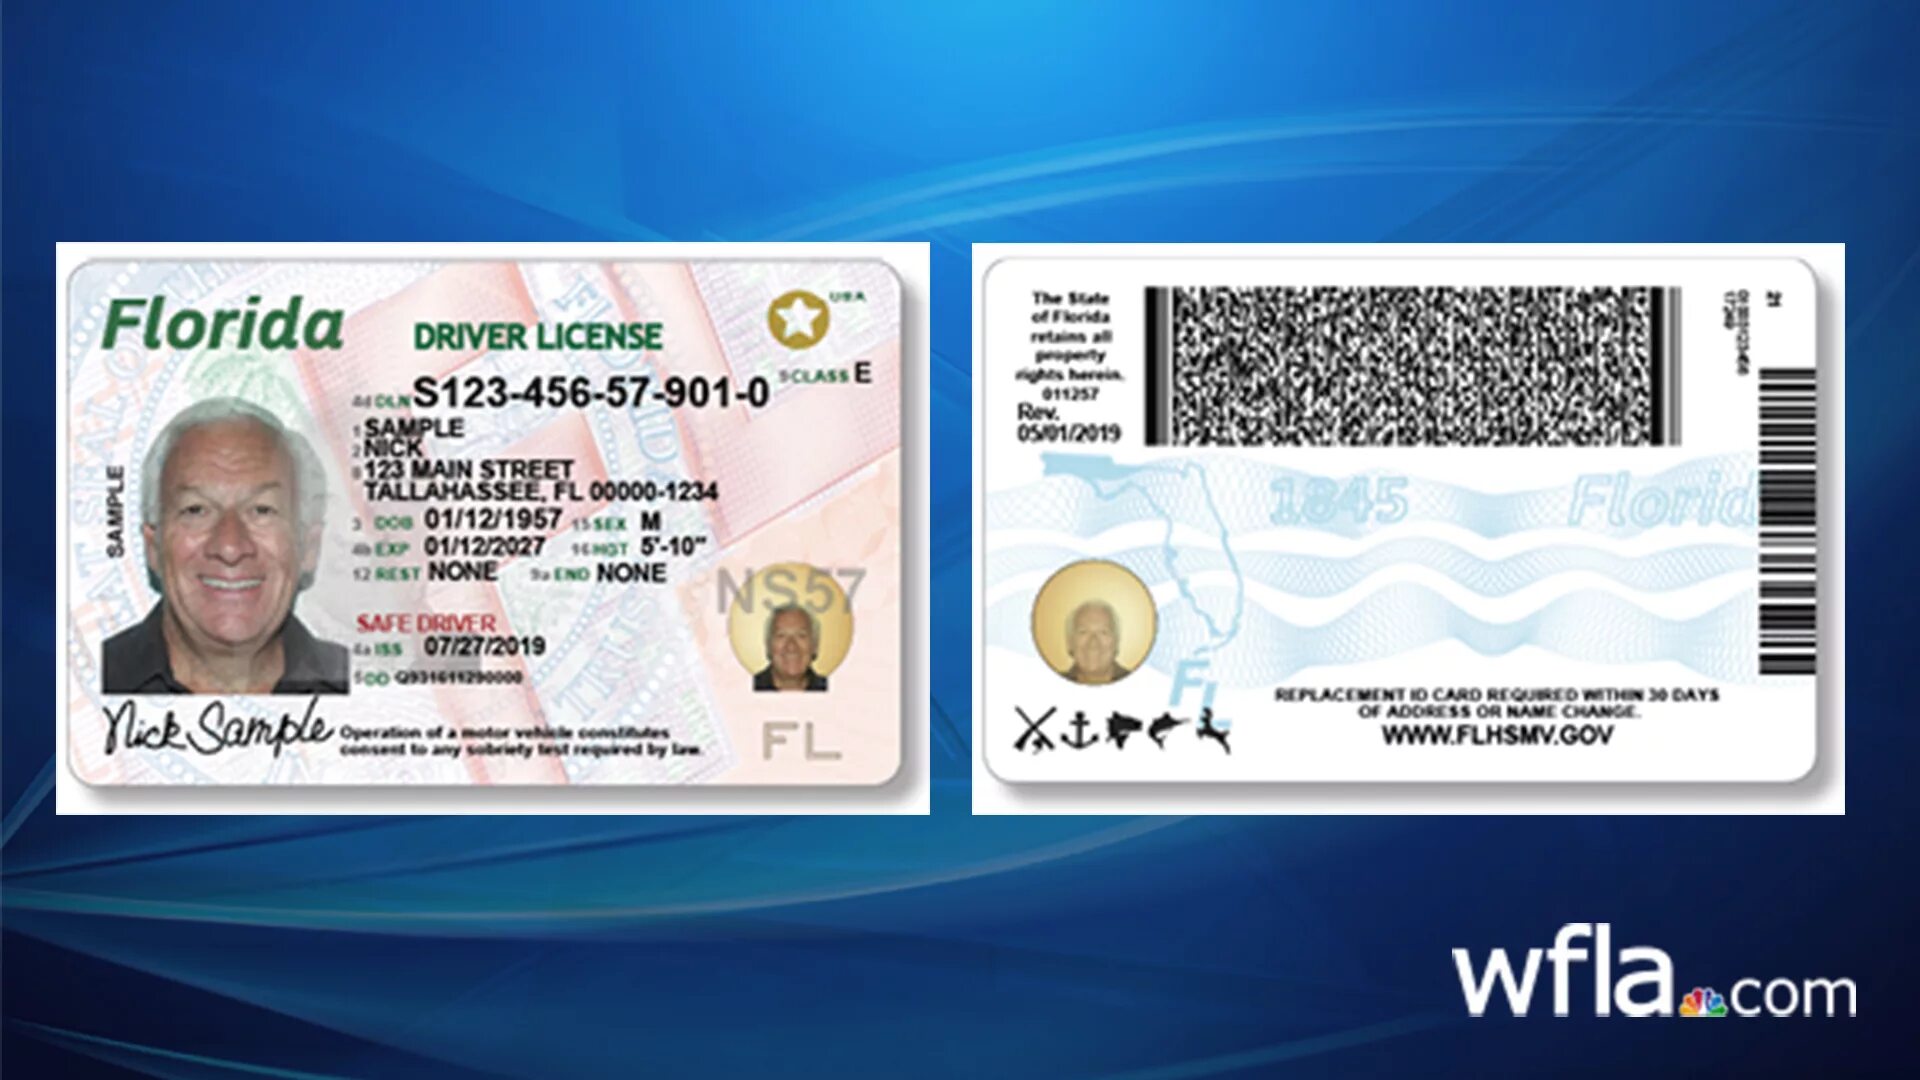 Ids license. Florida Driver License. ID карта USA. ID Card США.